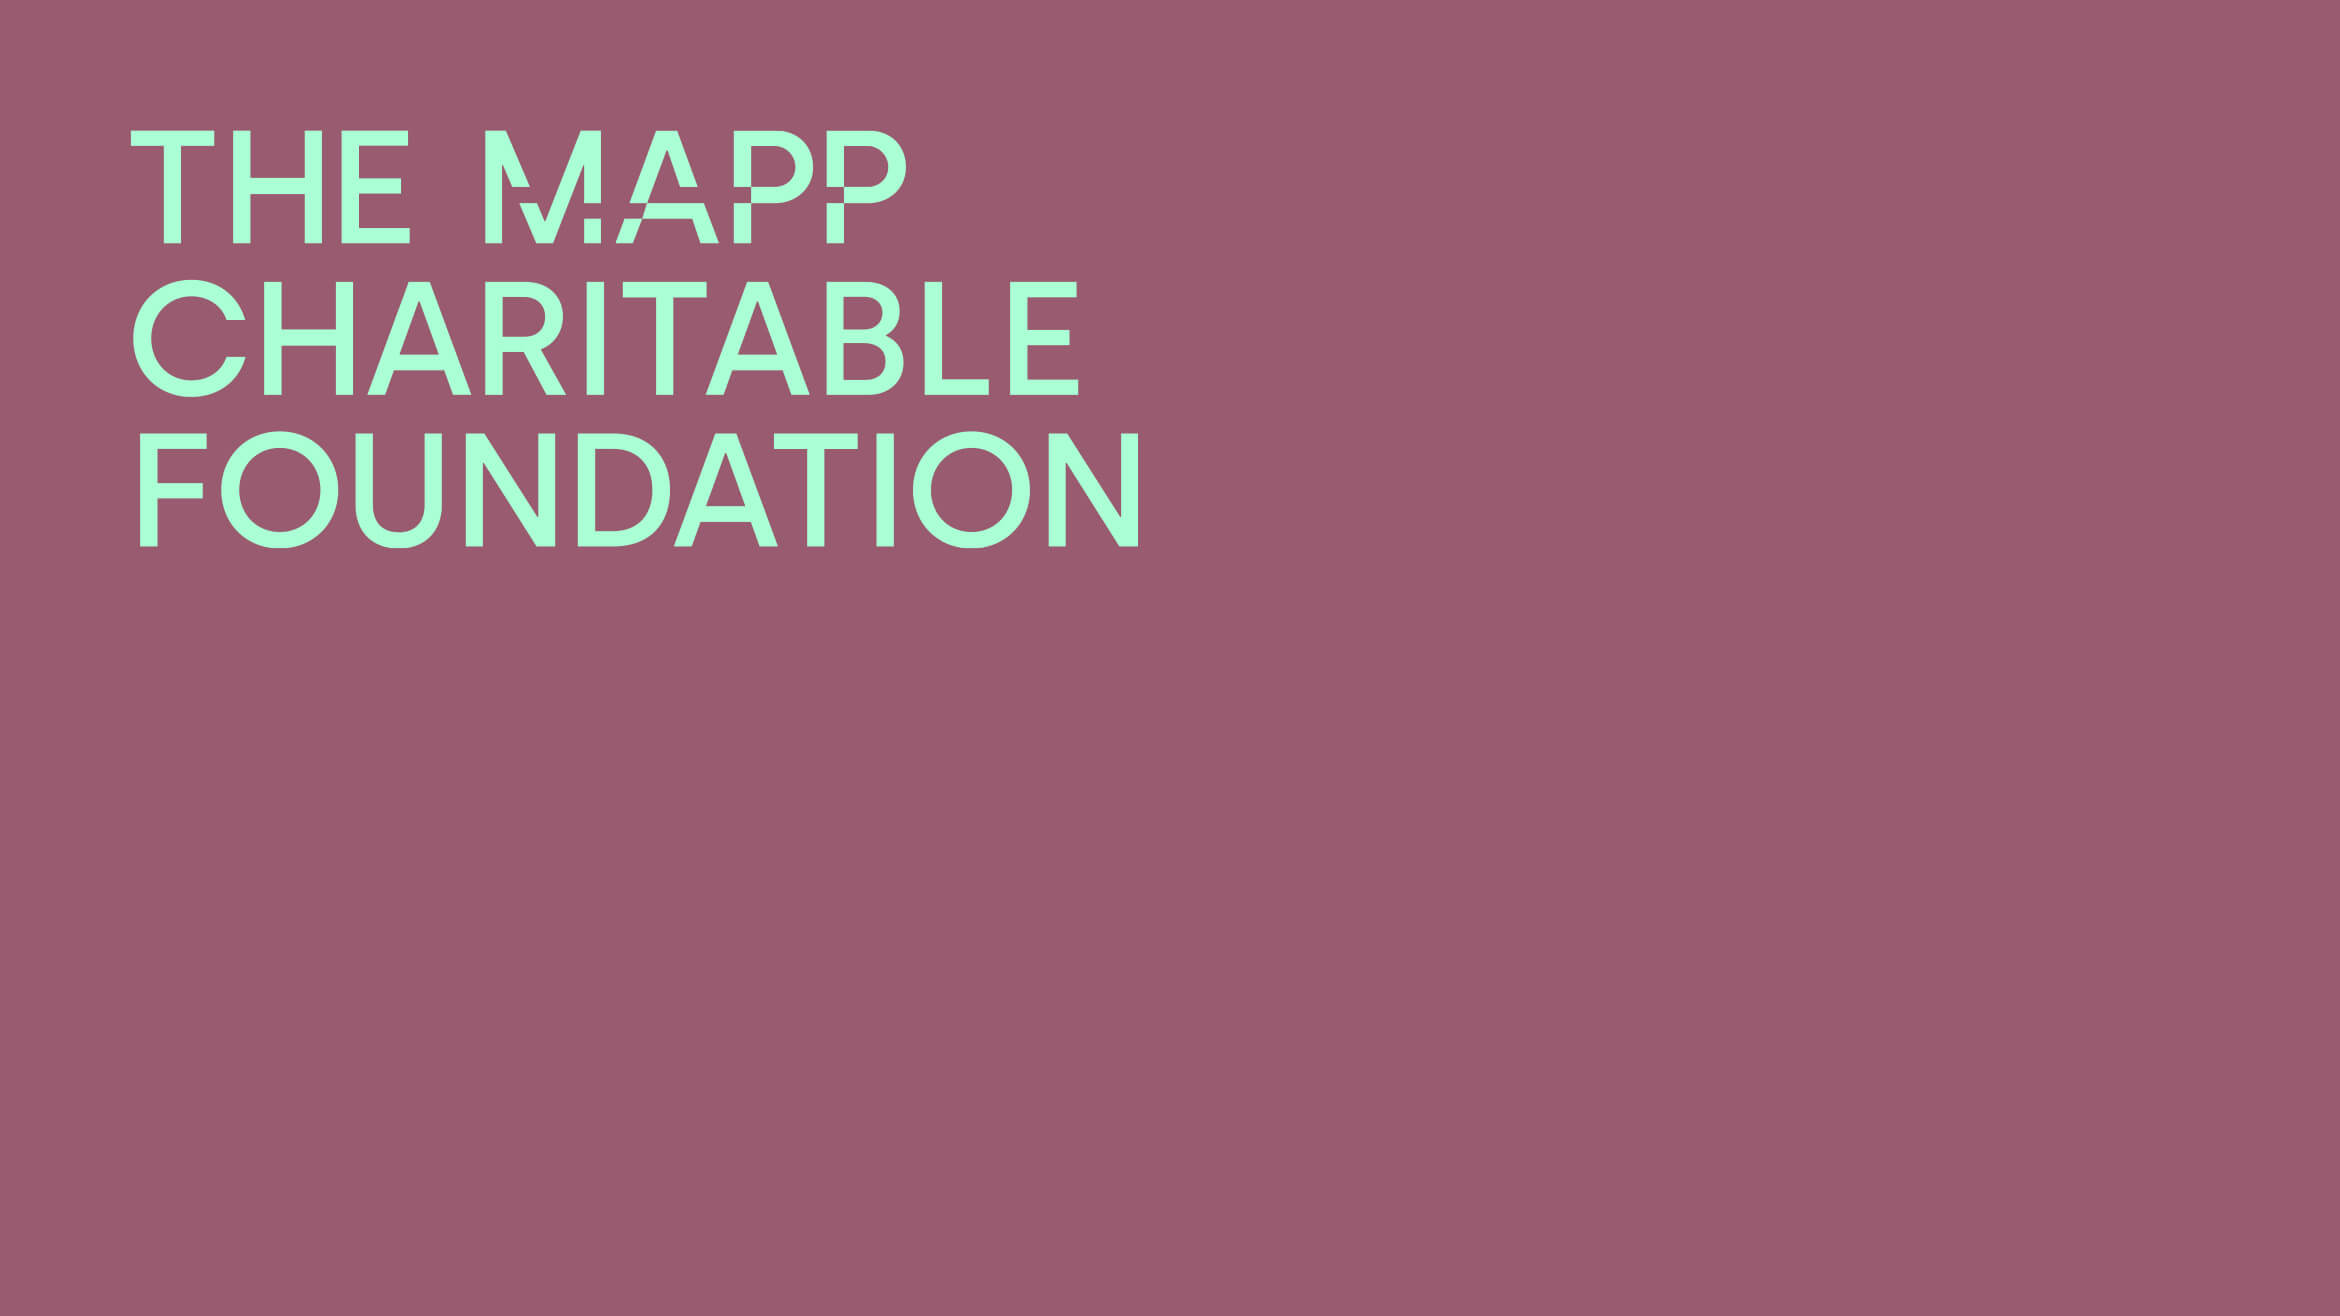 MAPP Charitable Foundation logo on a plain background